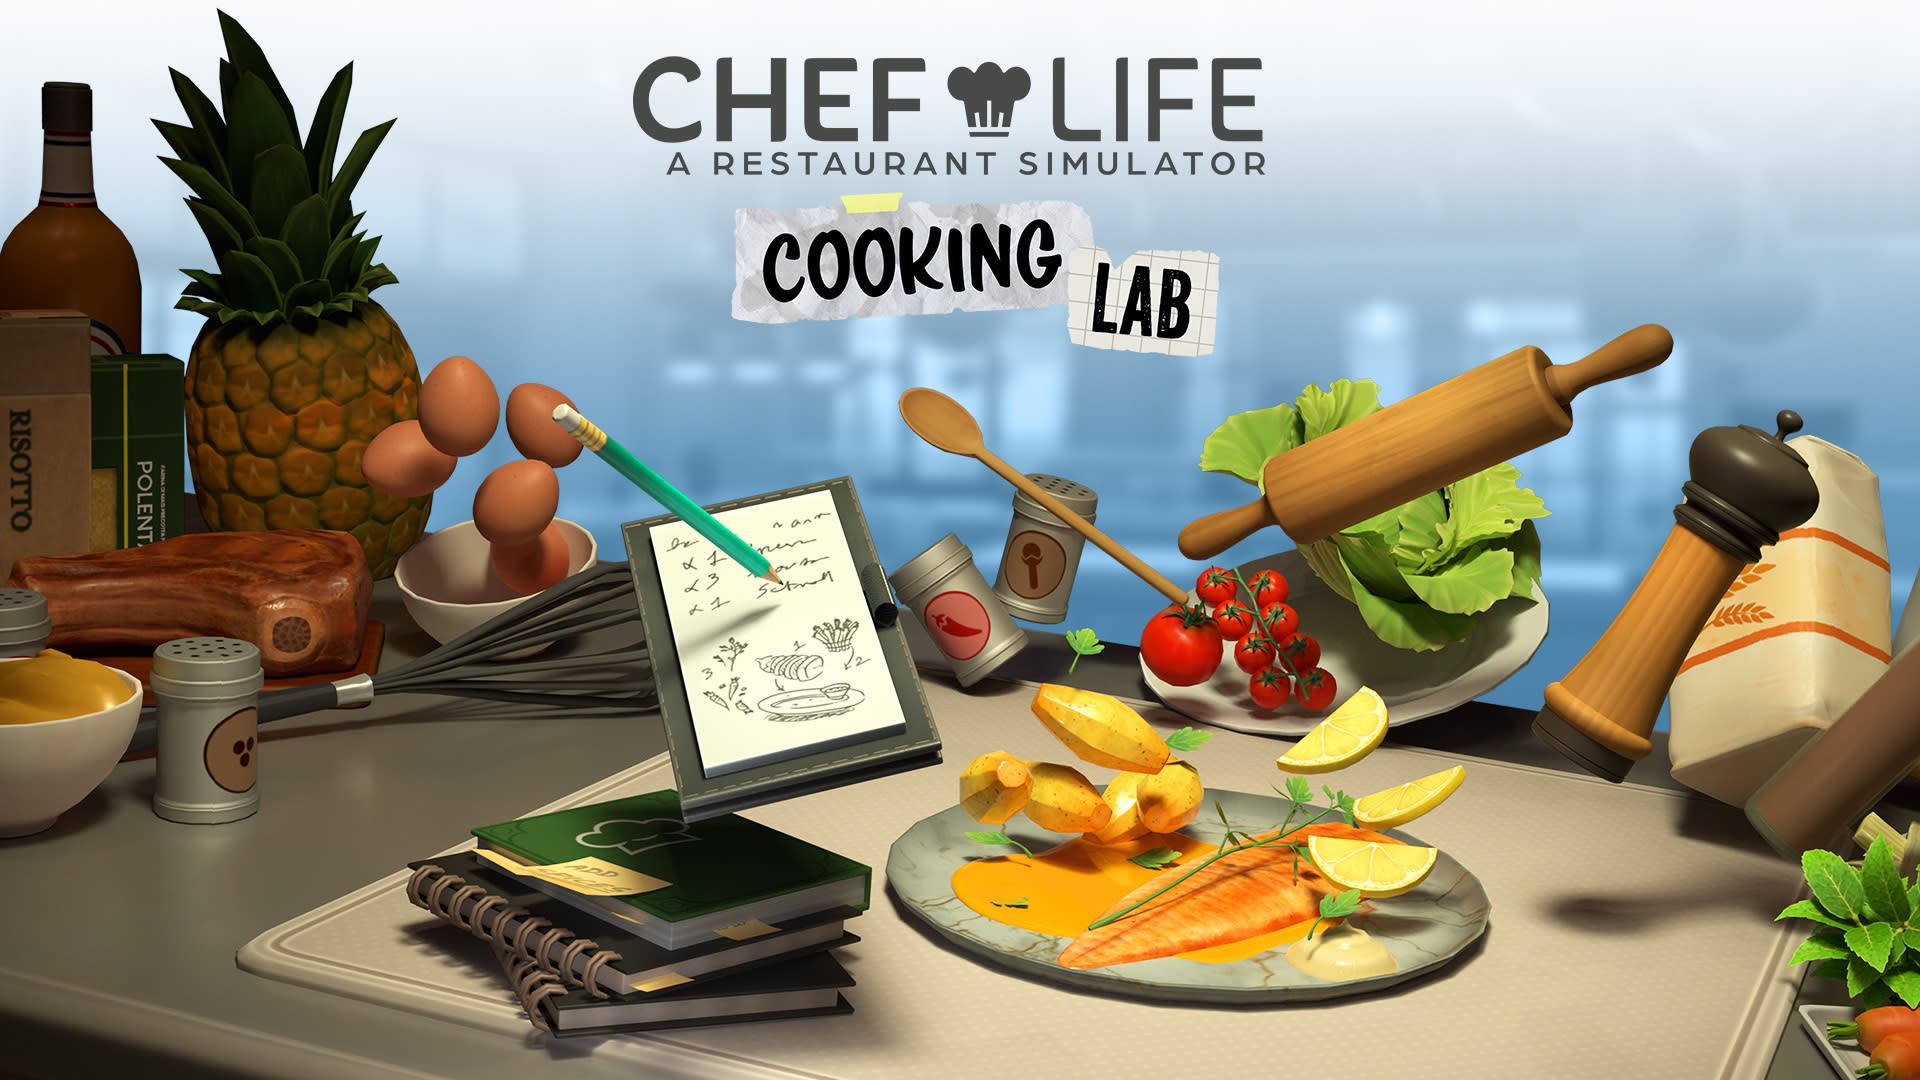 Chef Life: A Restaurant Simulator - COOKING LAB